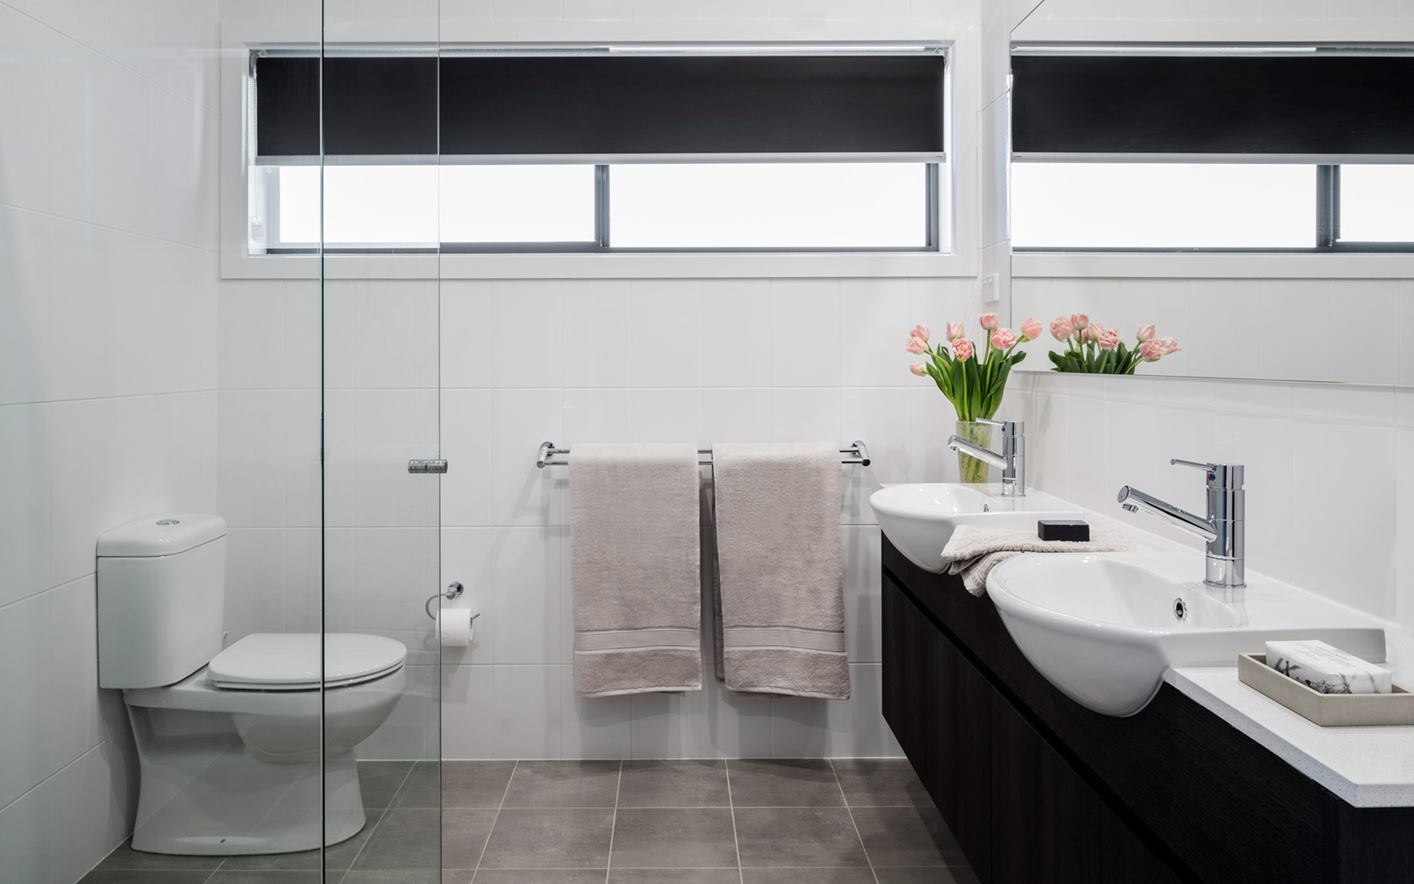 Thrive Homes Helix Home Design Bathroom